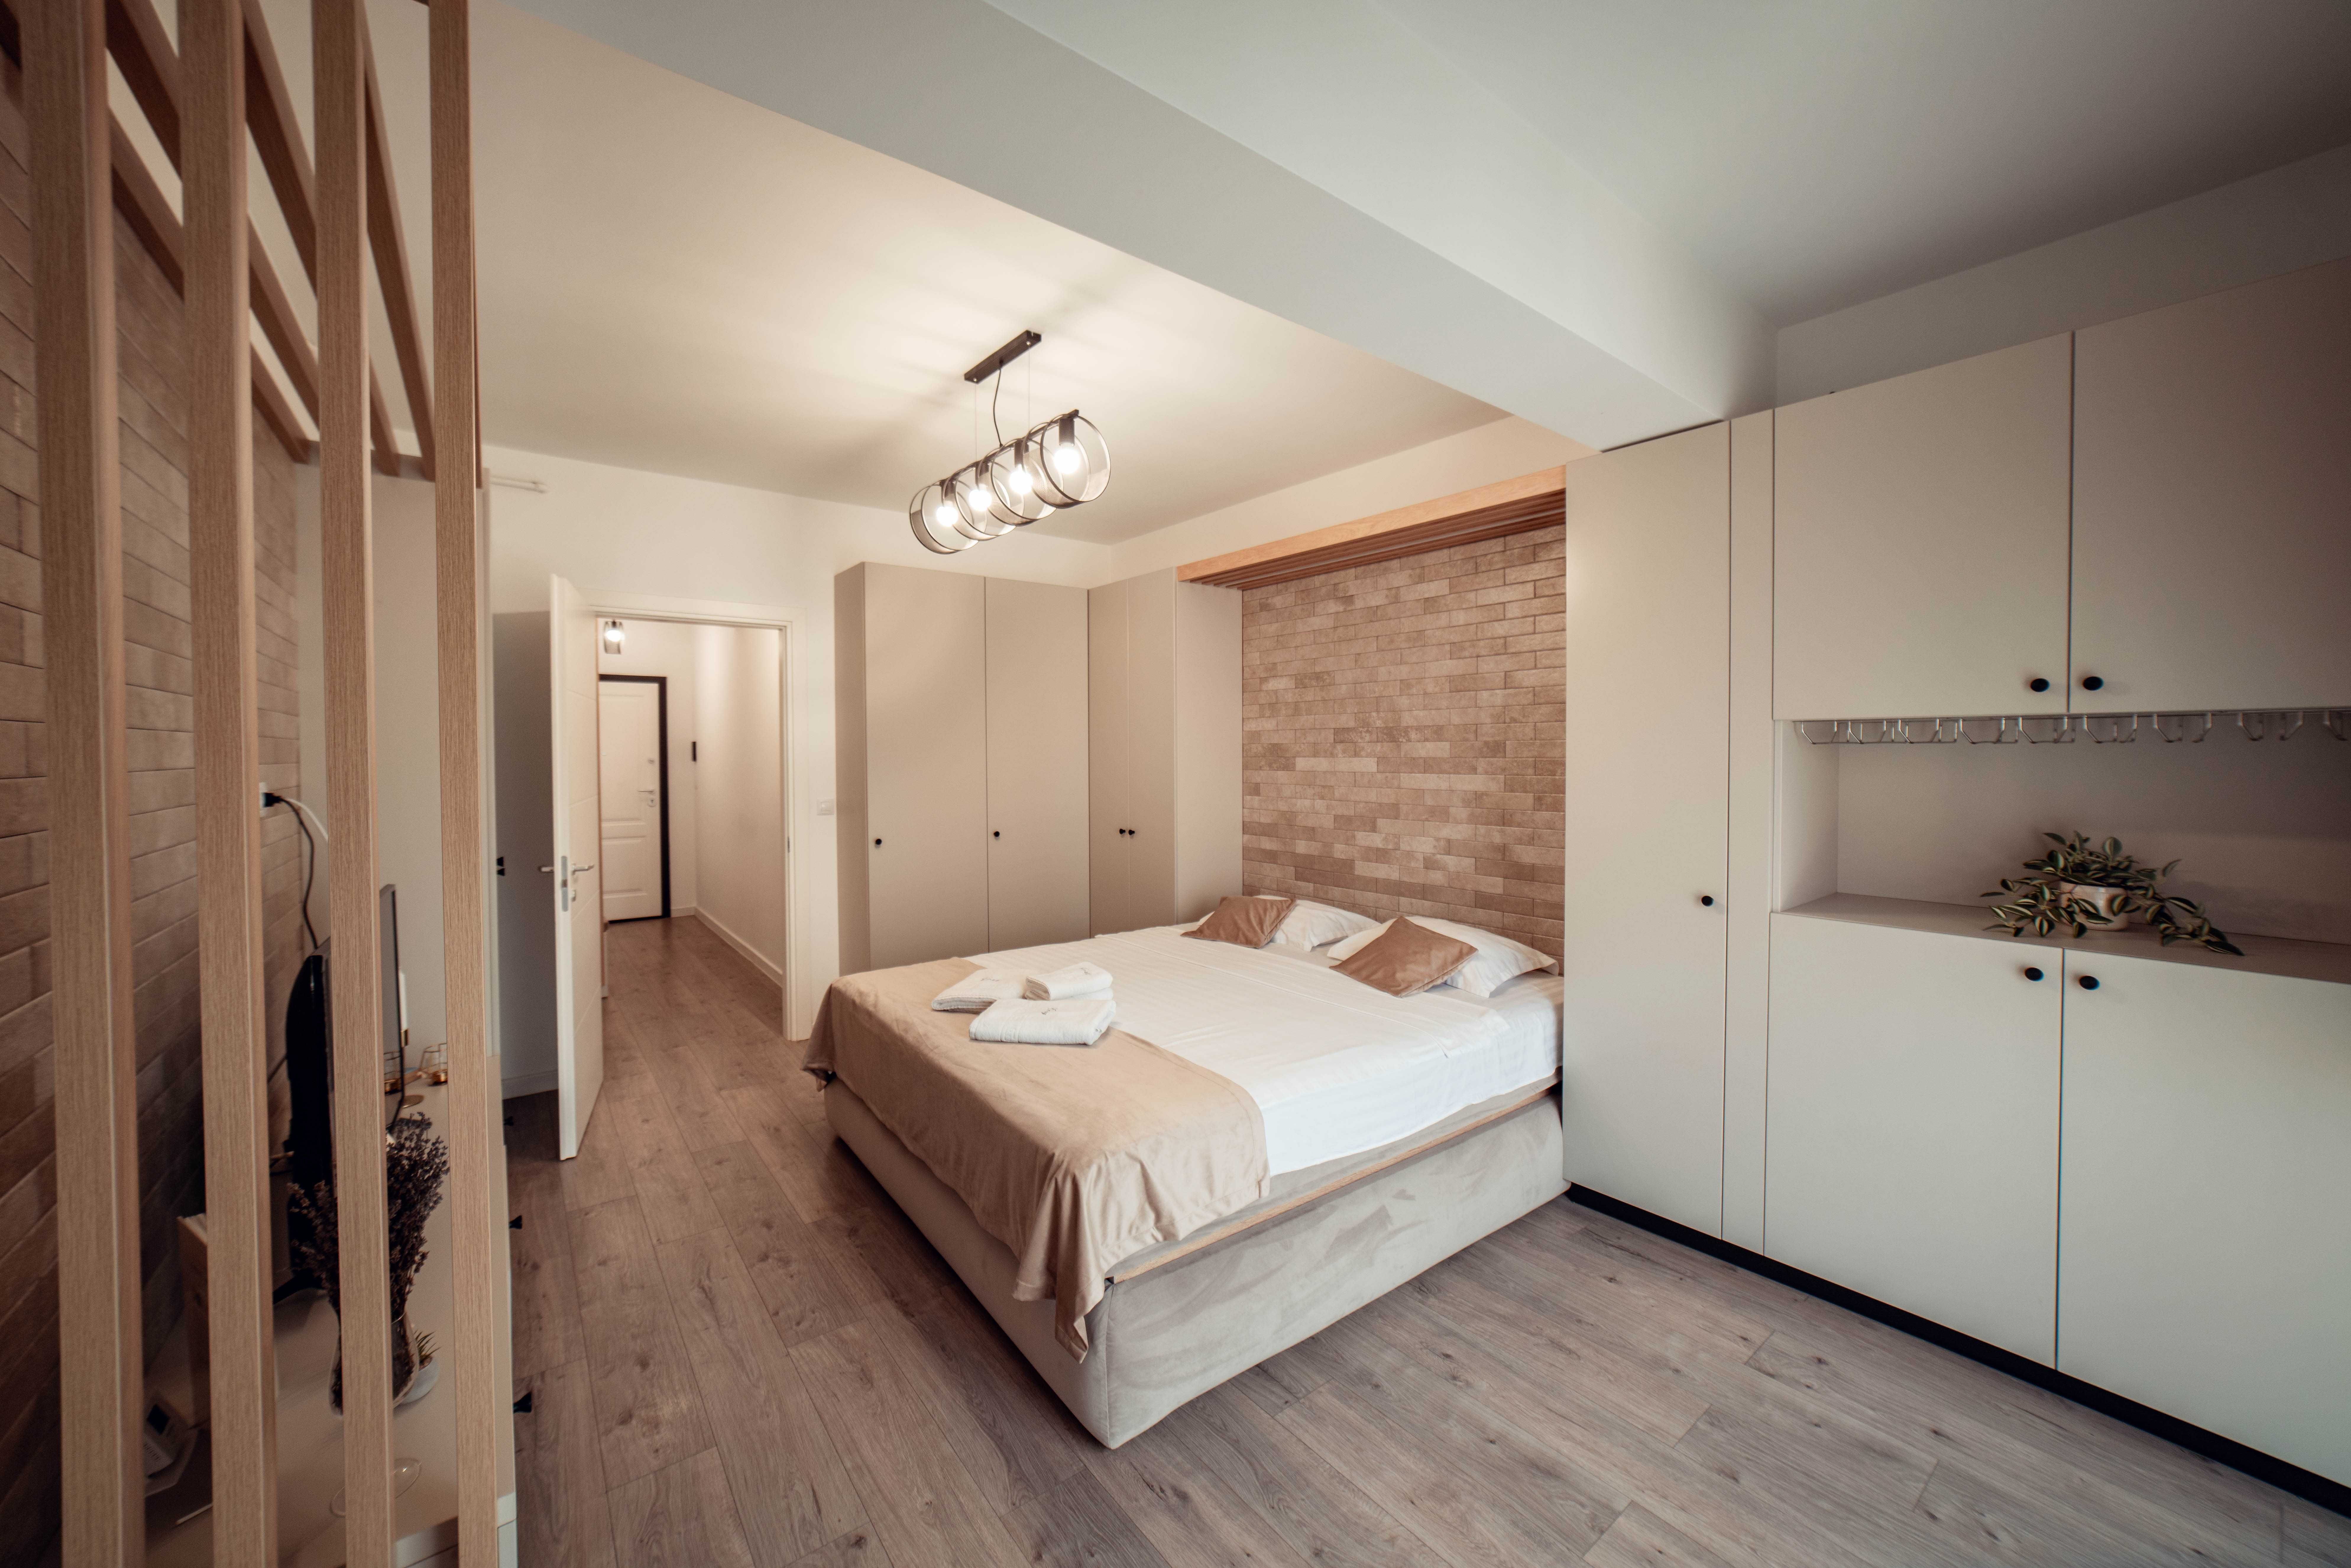 Cazare Palas/Newton/Copou in Apartamente de Lux - Regim Hotelier